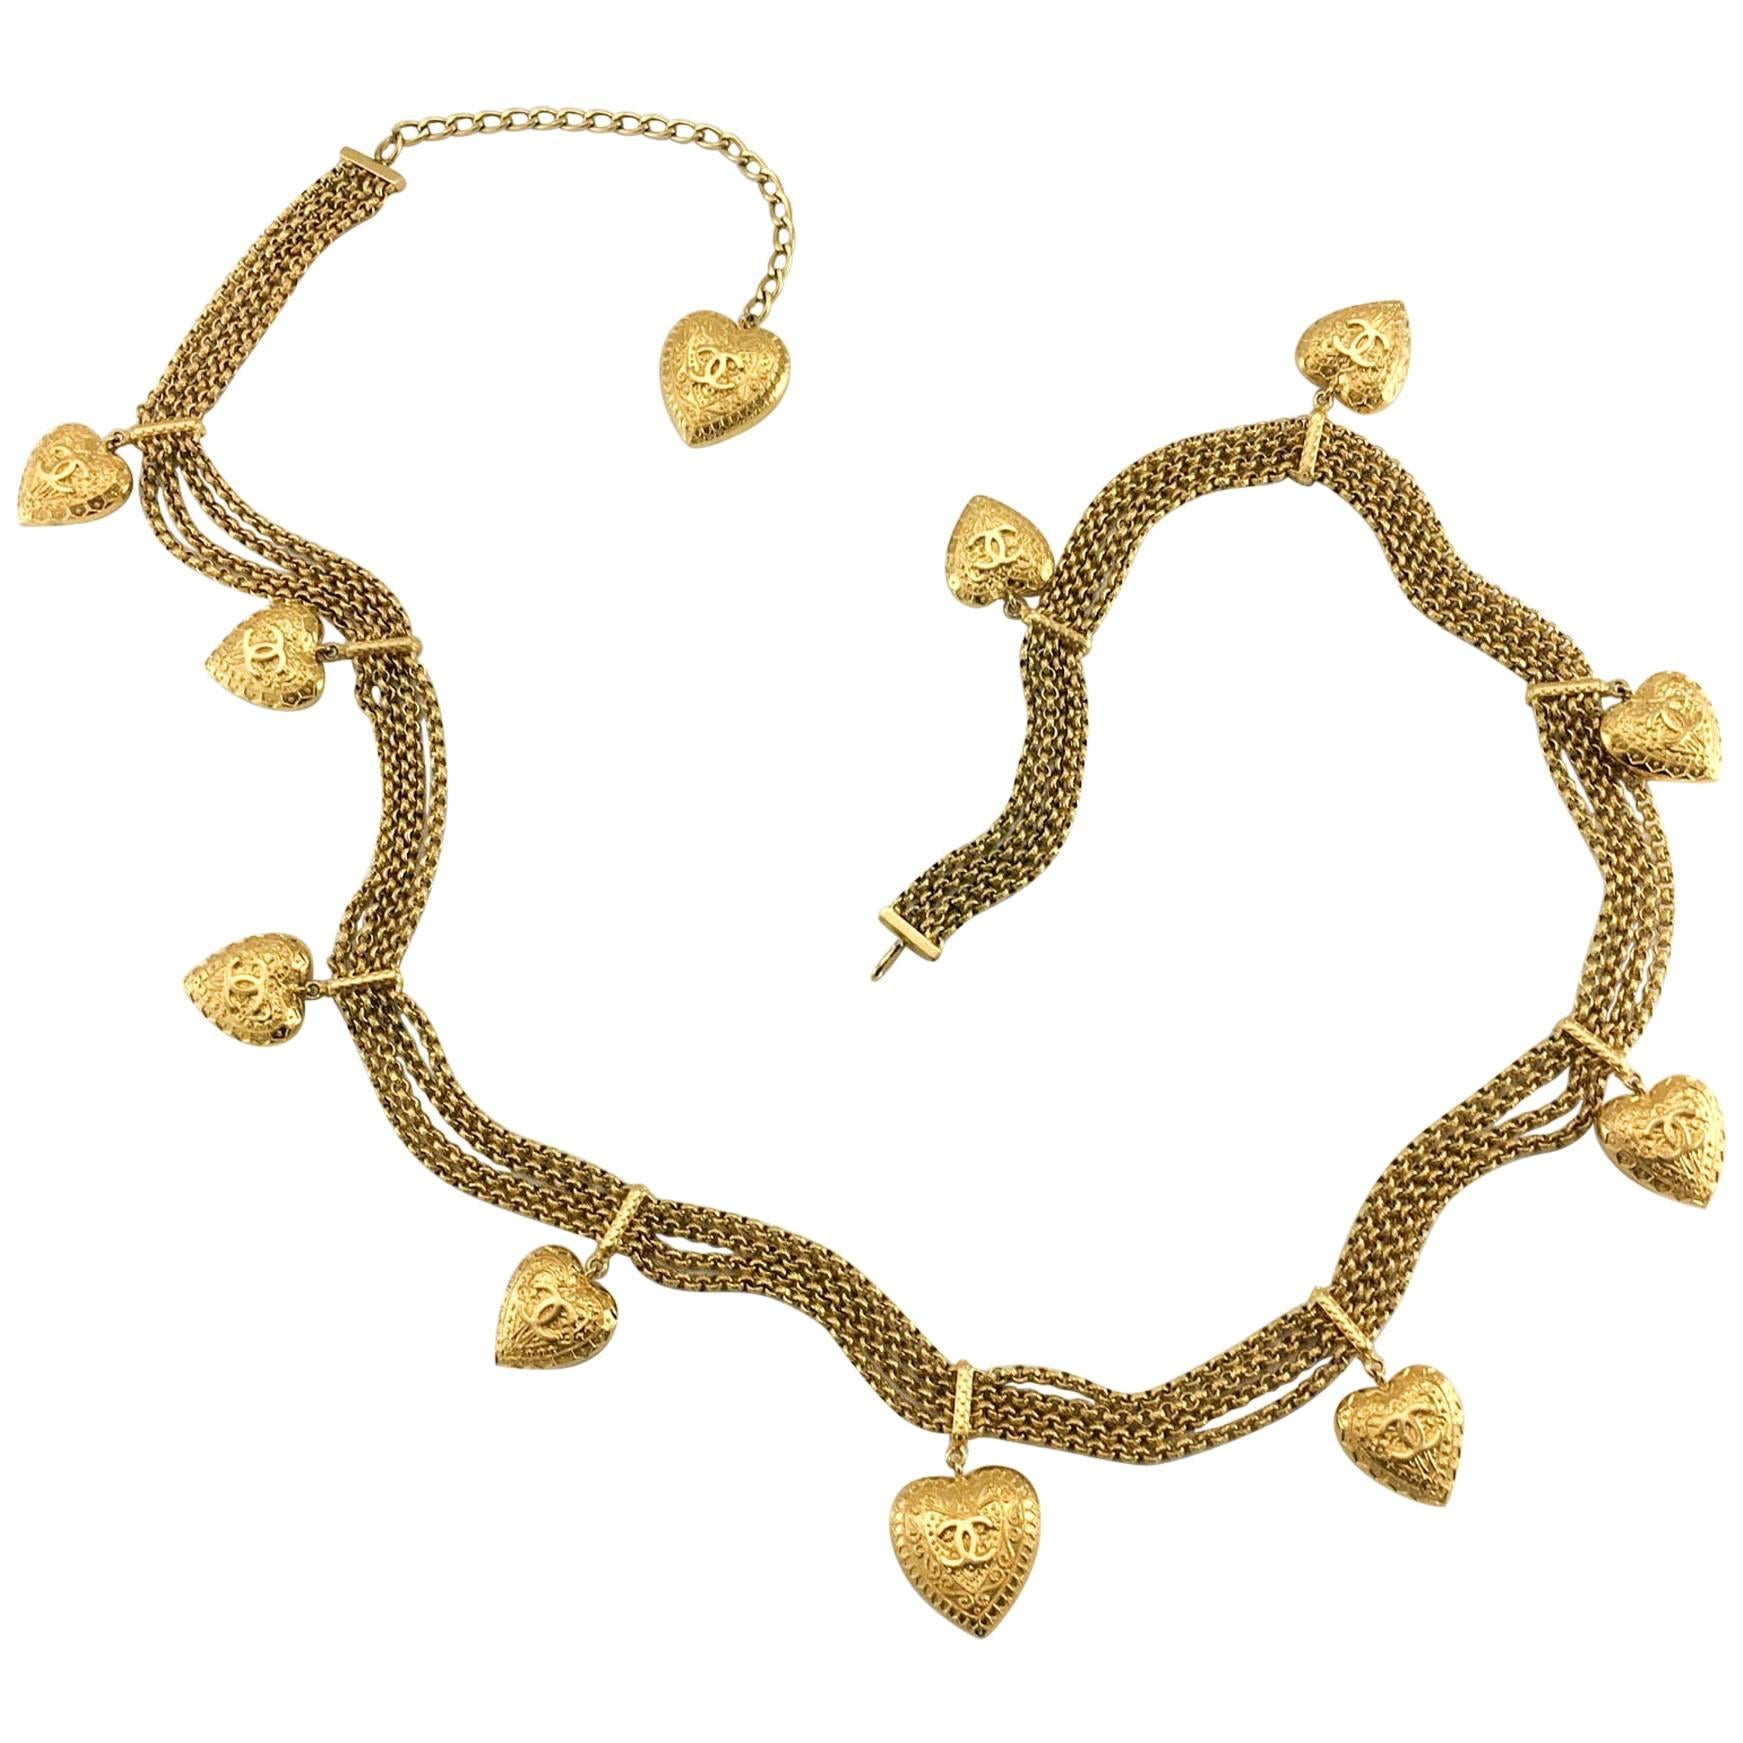 Chanel Gold-Tone Baroque-Esque Heart Belt / Necklace - 1996